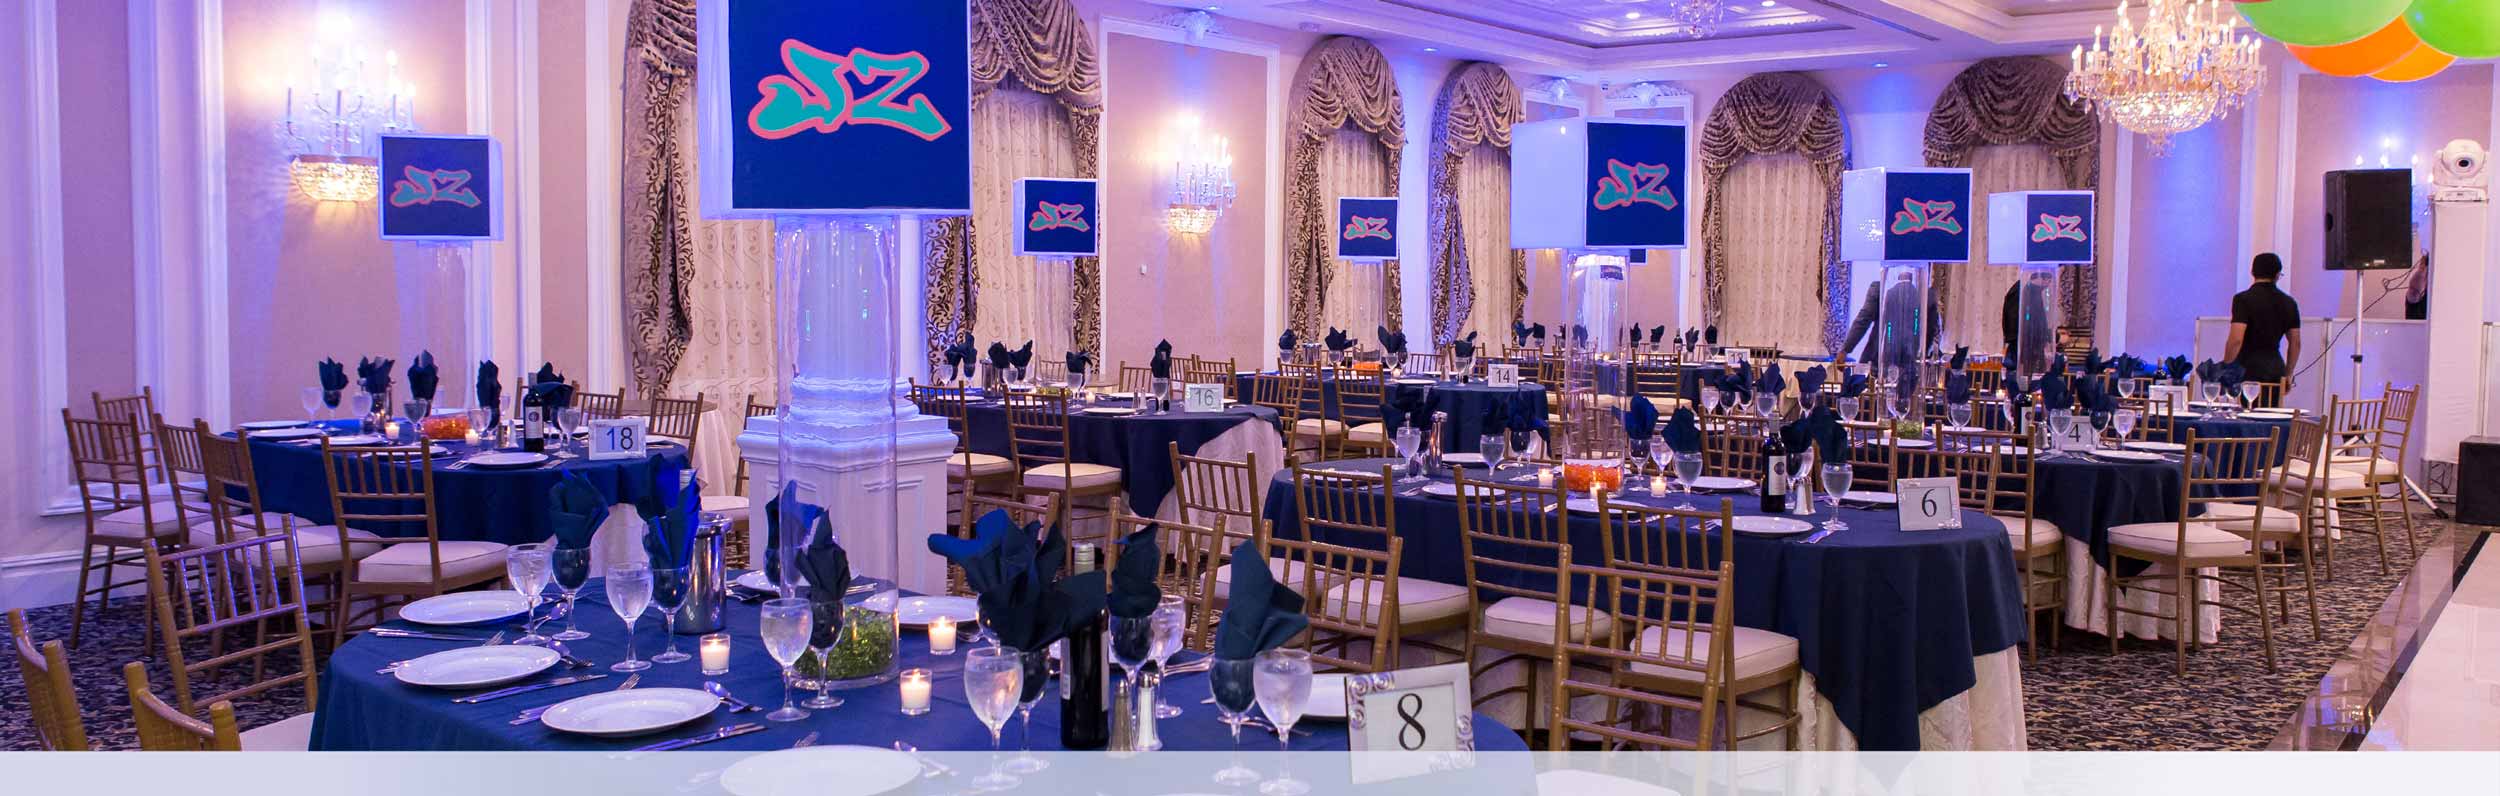 Mitzvah Banner 1 Blue Table Setup